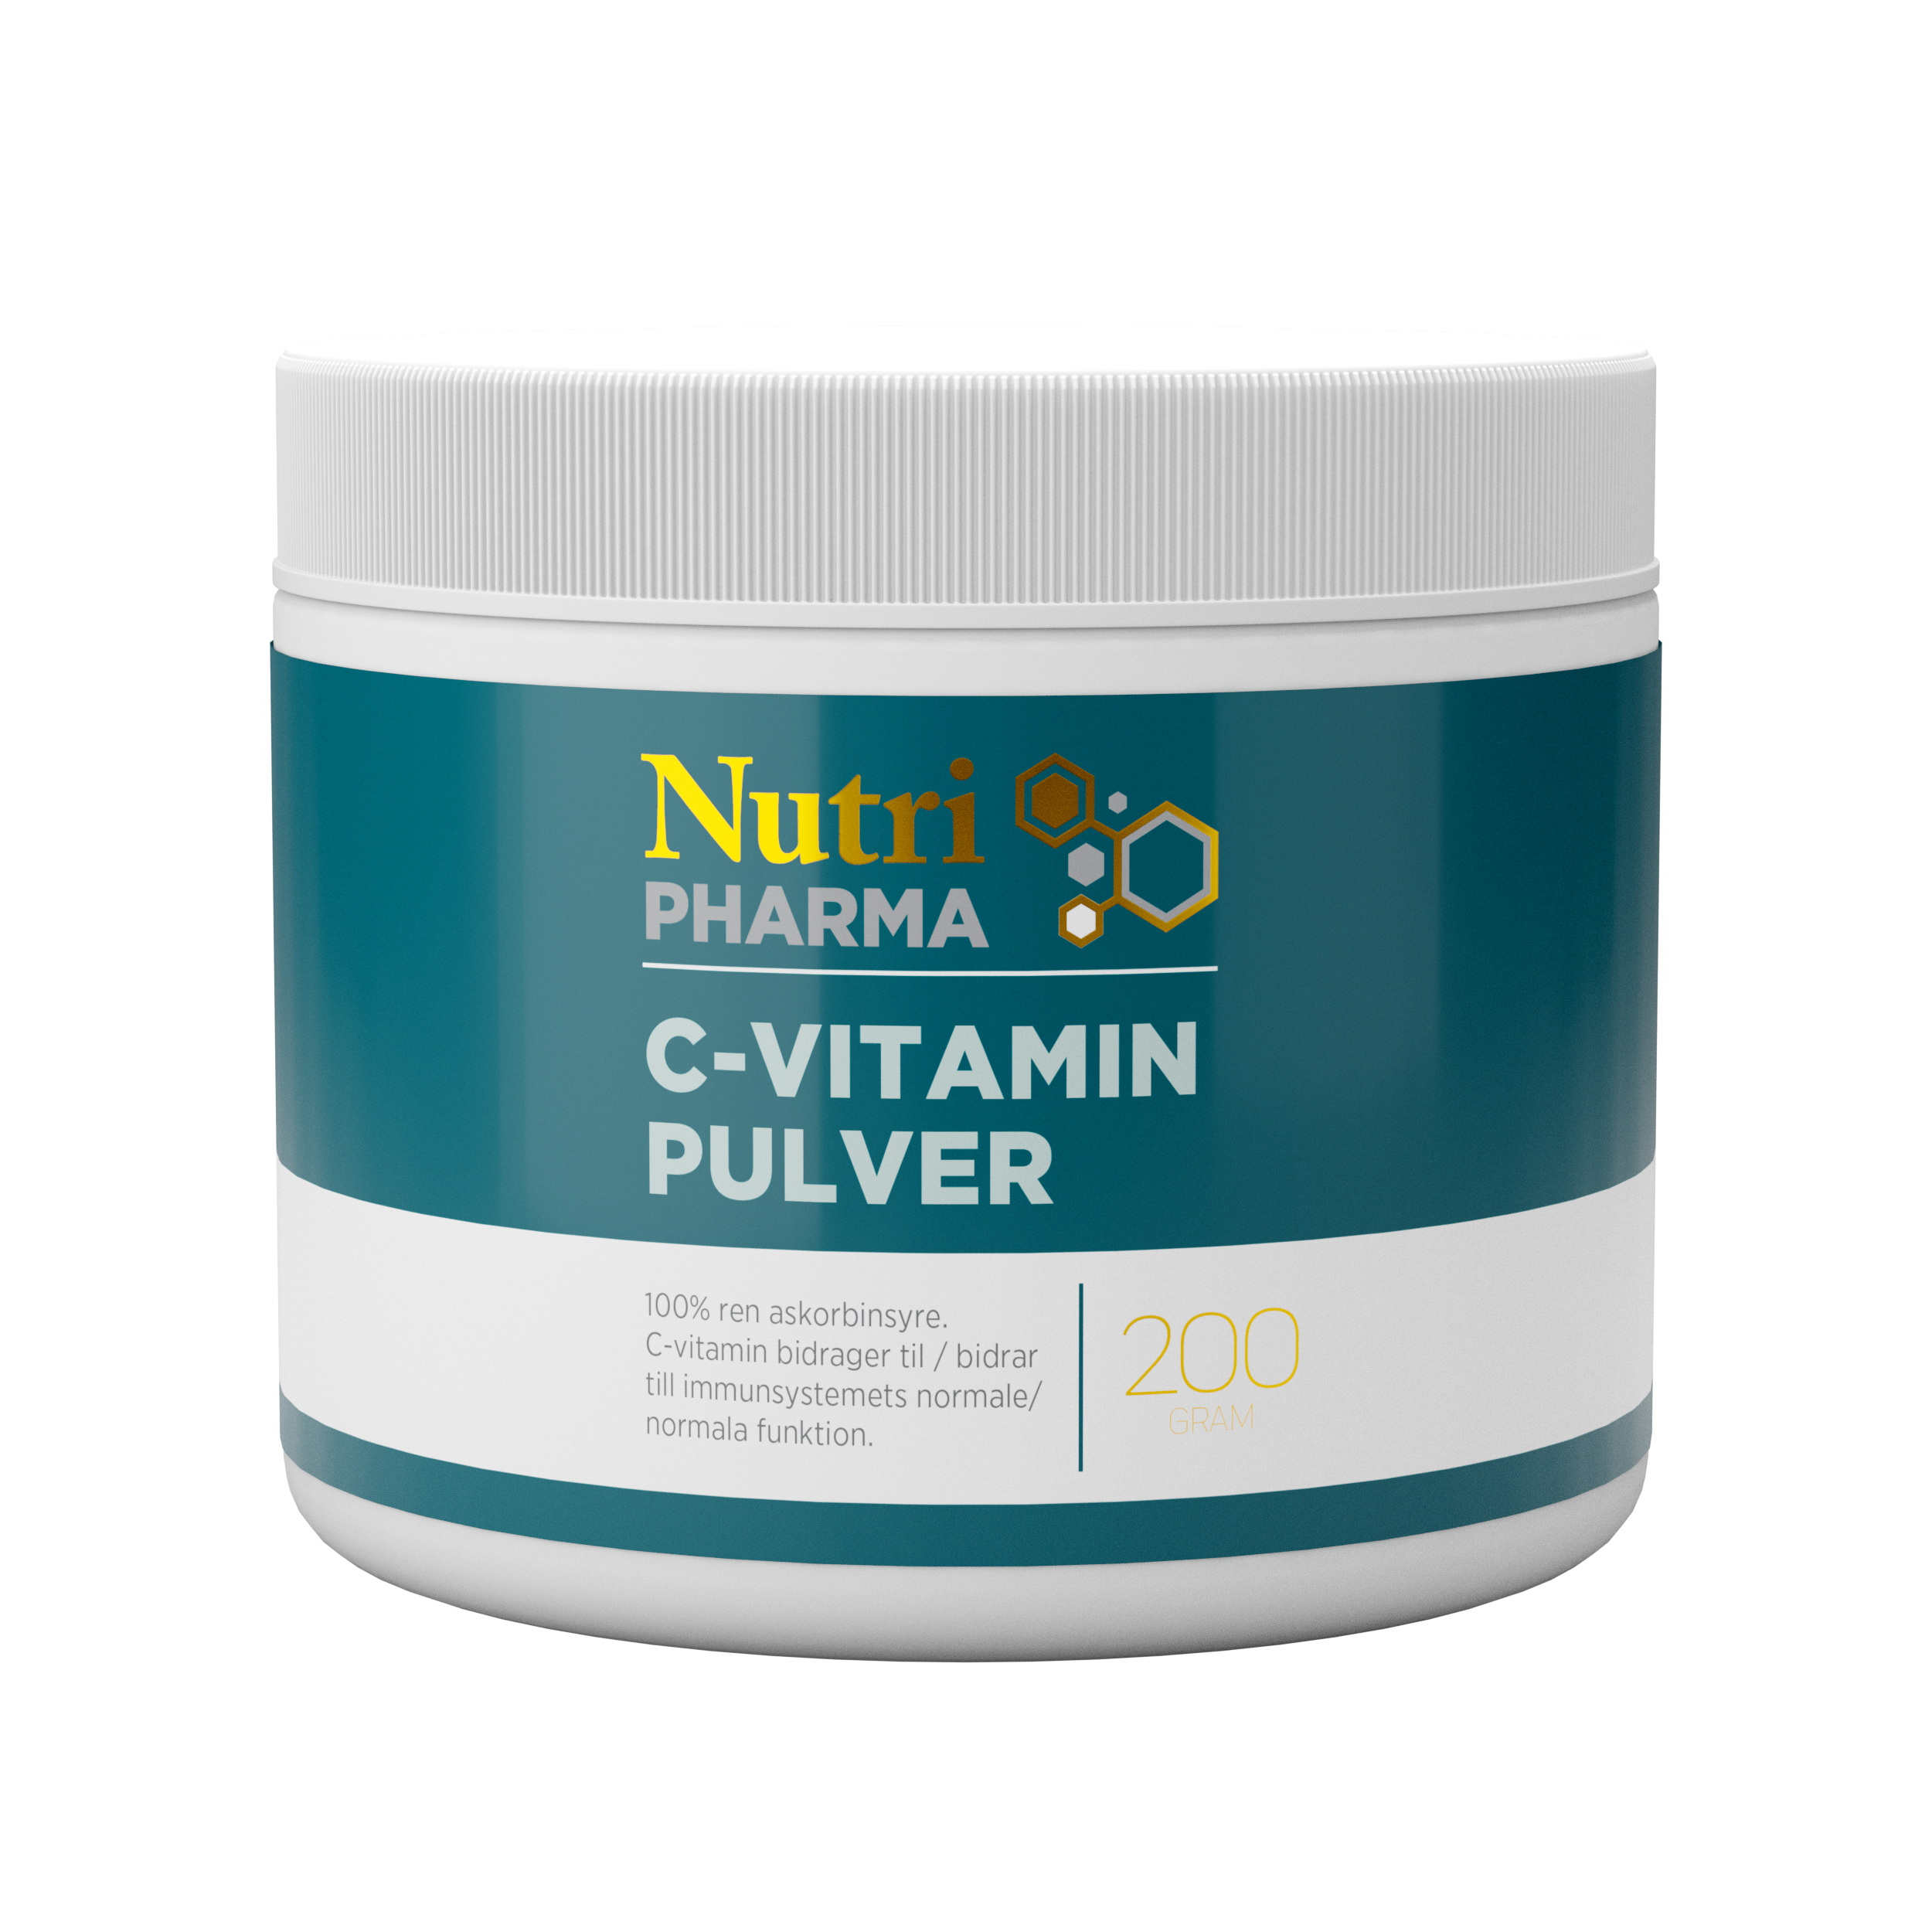 C-Vitamin pulver 200g